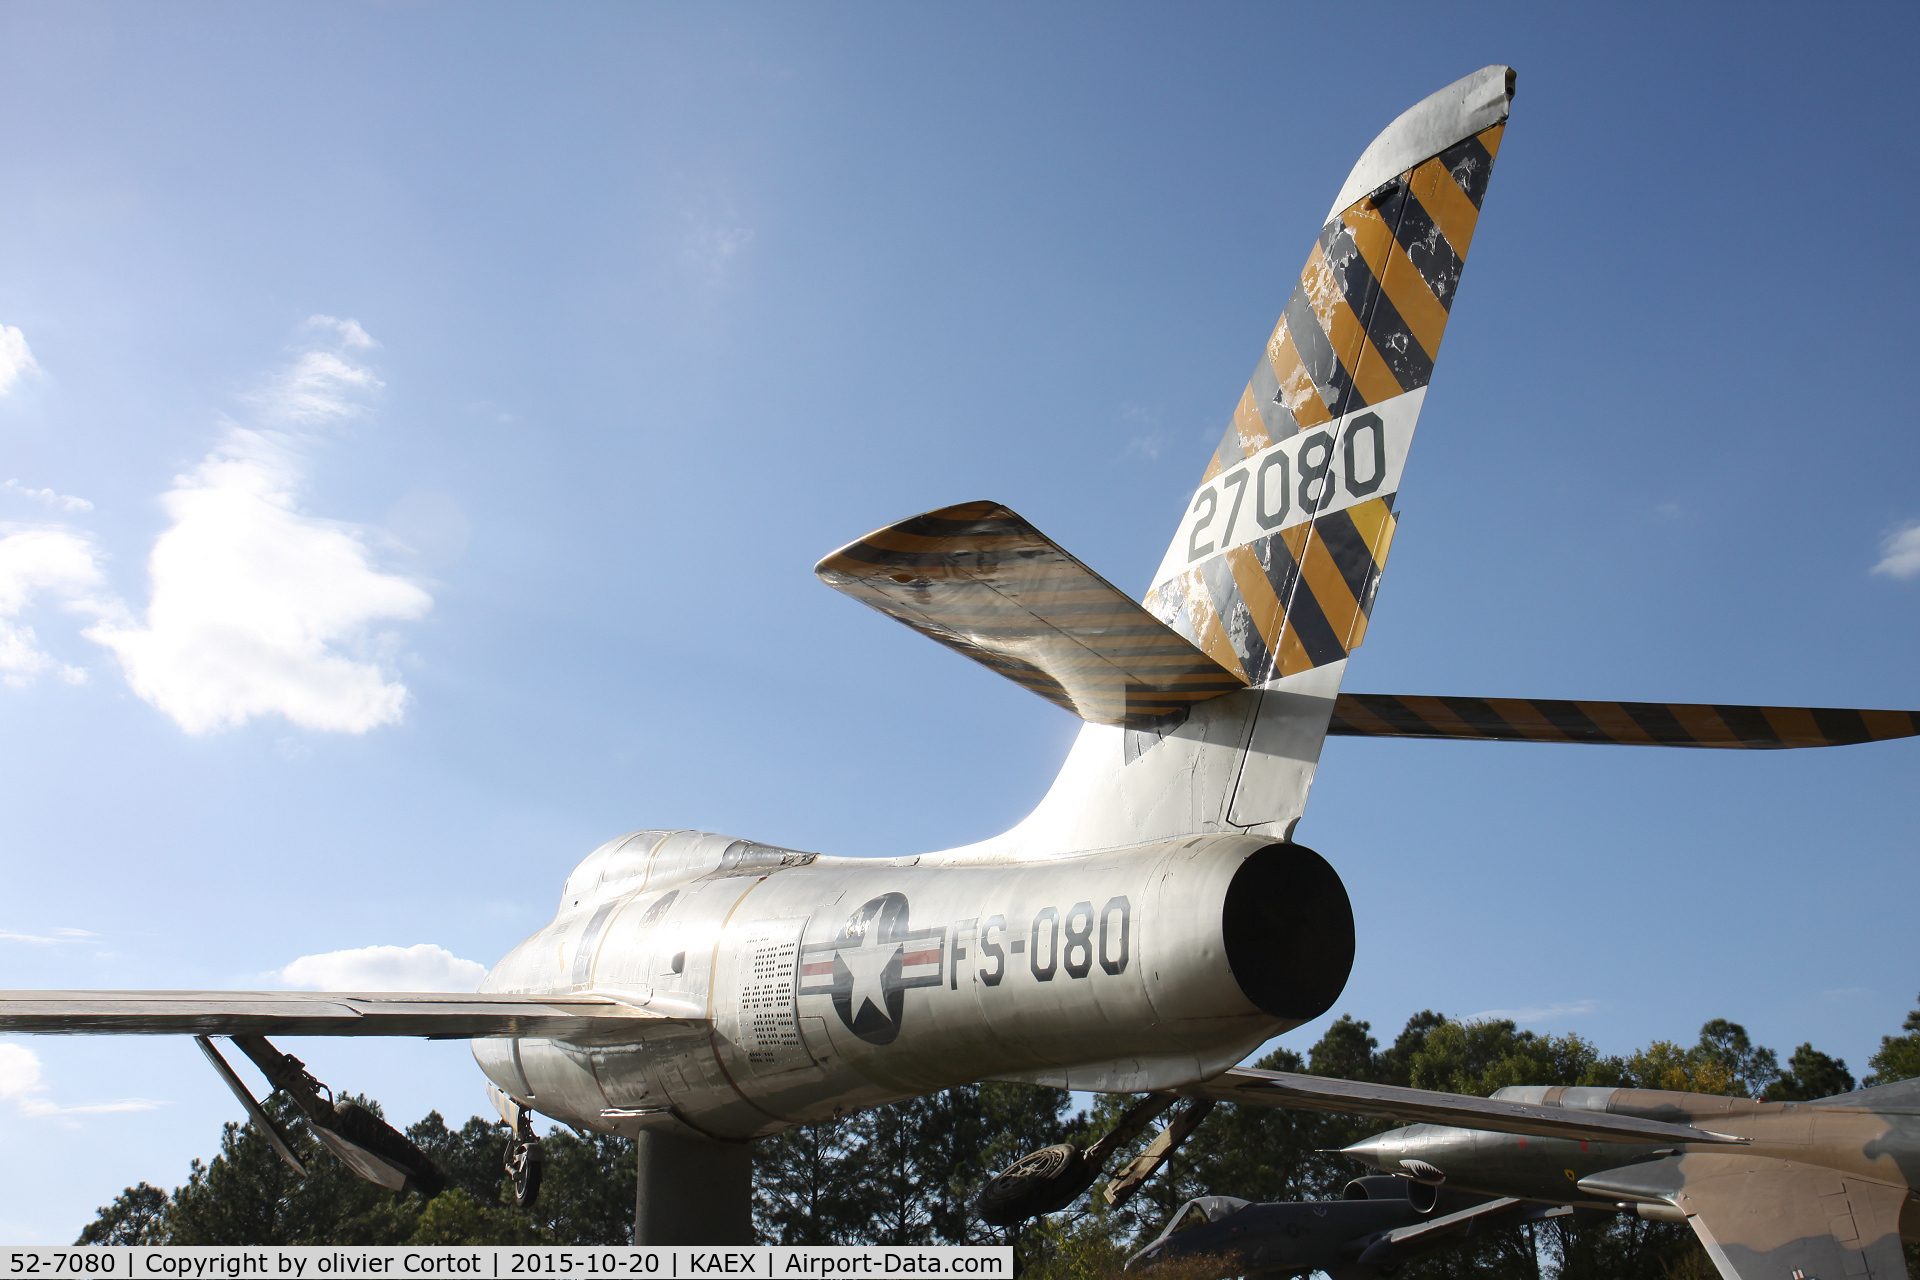 52-7080, 1952 Republic F-84F Thunderstreak C/N Not found 52-7080, rear view